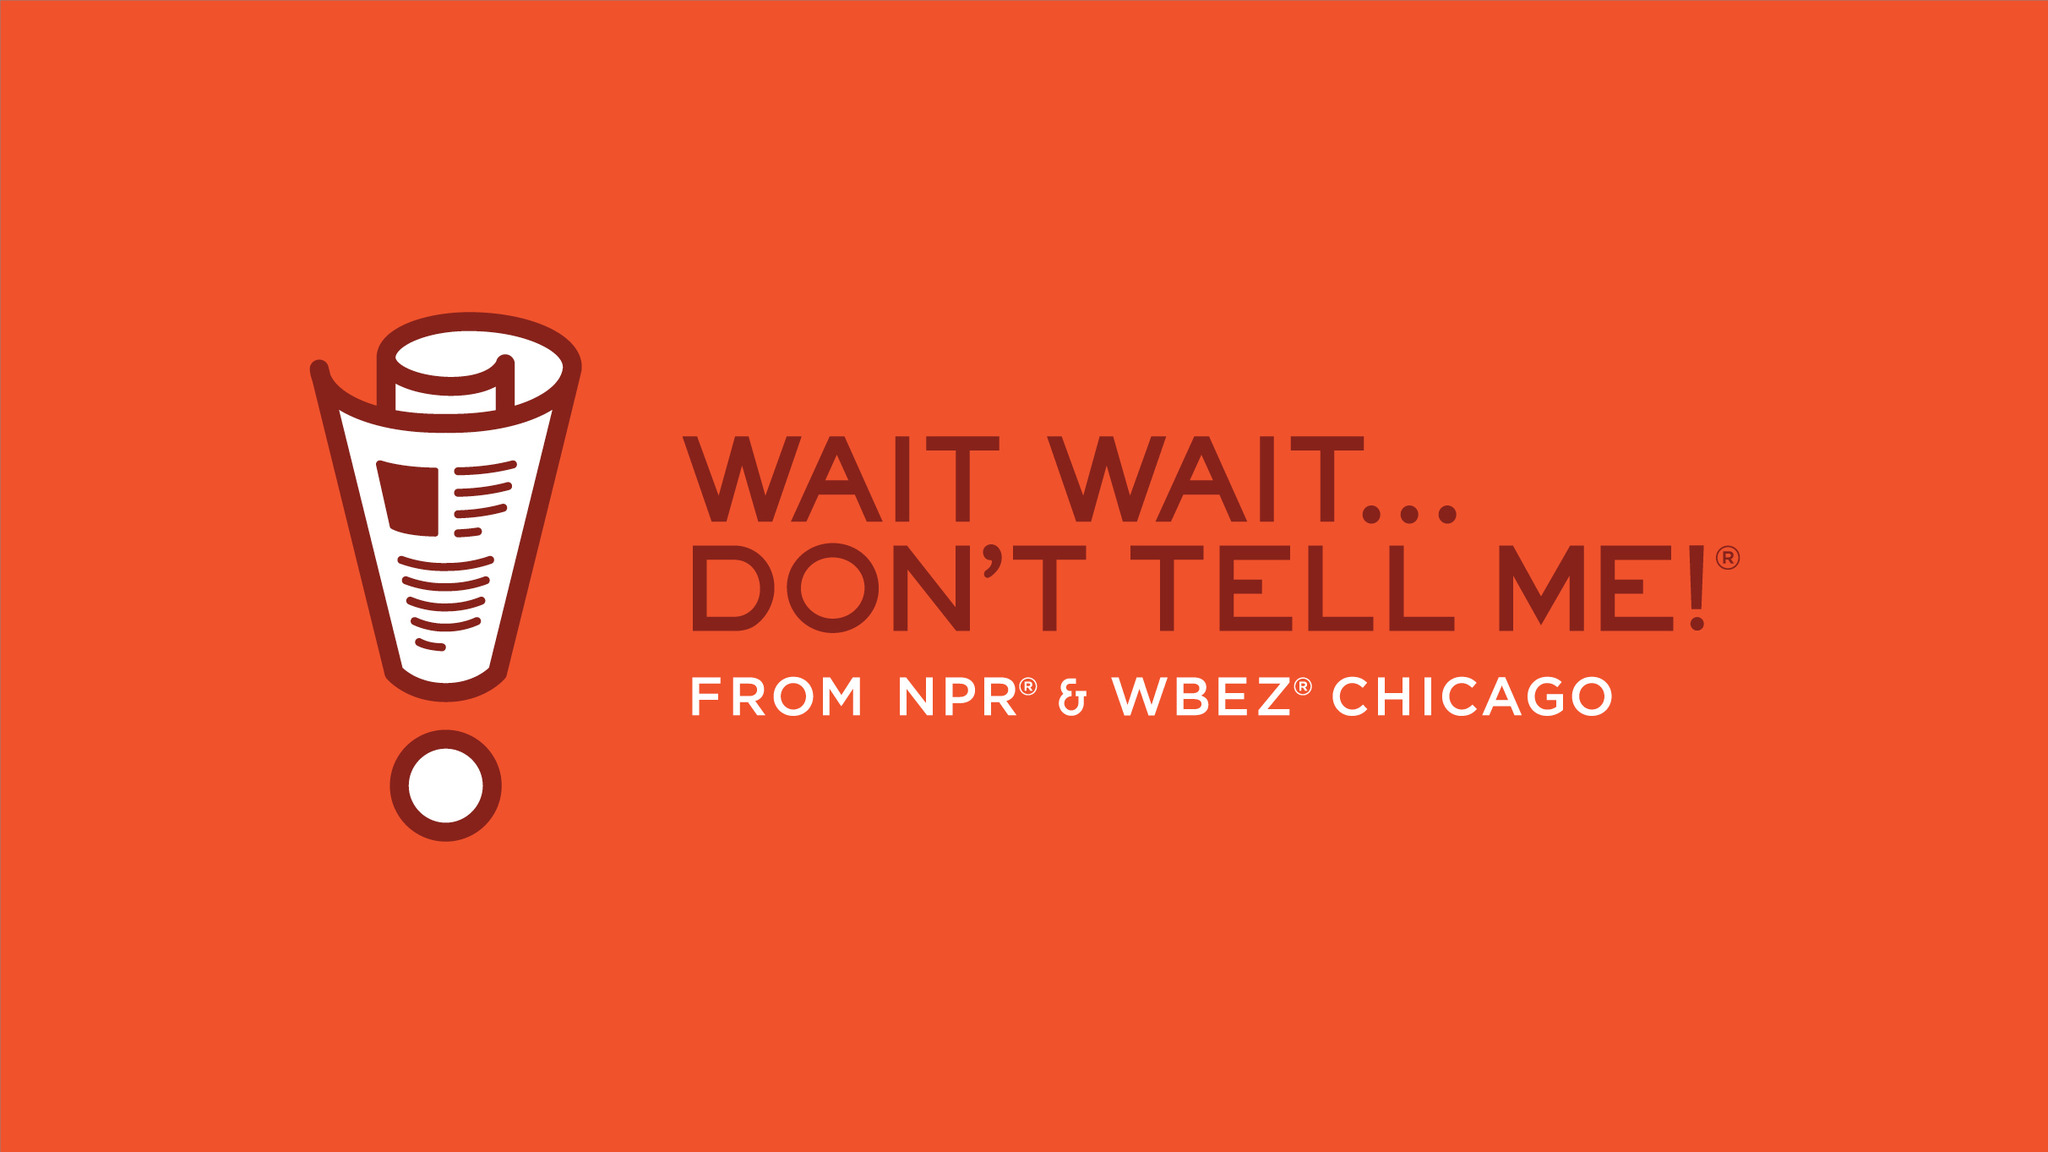 NPR's Wait Wait Don't Tell Me Tickets Event Dates & Schedule